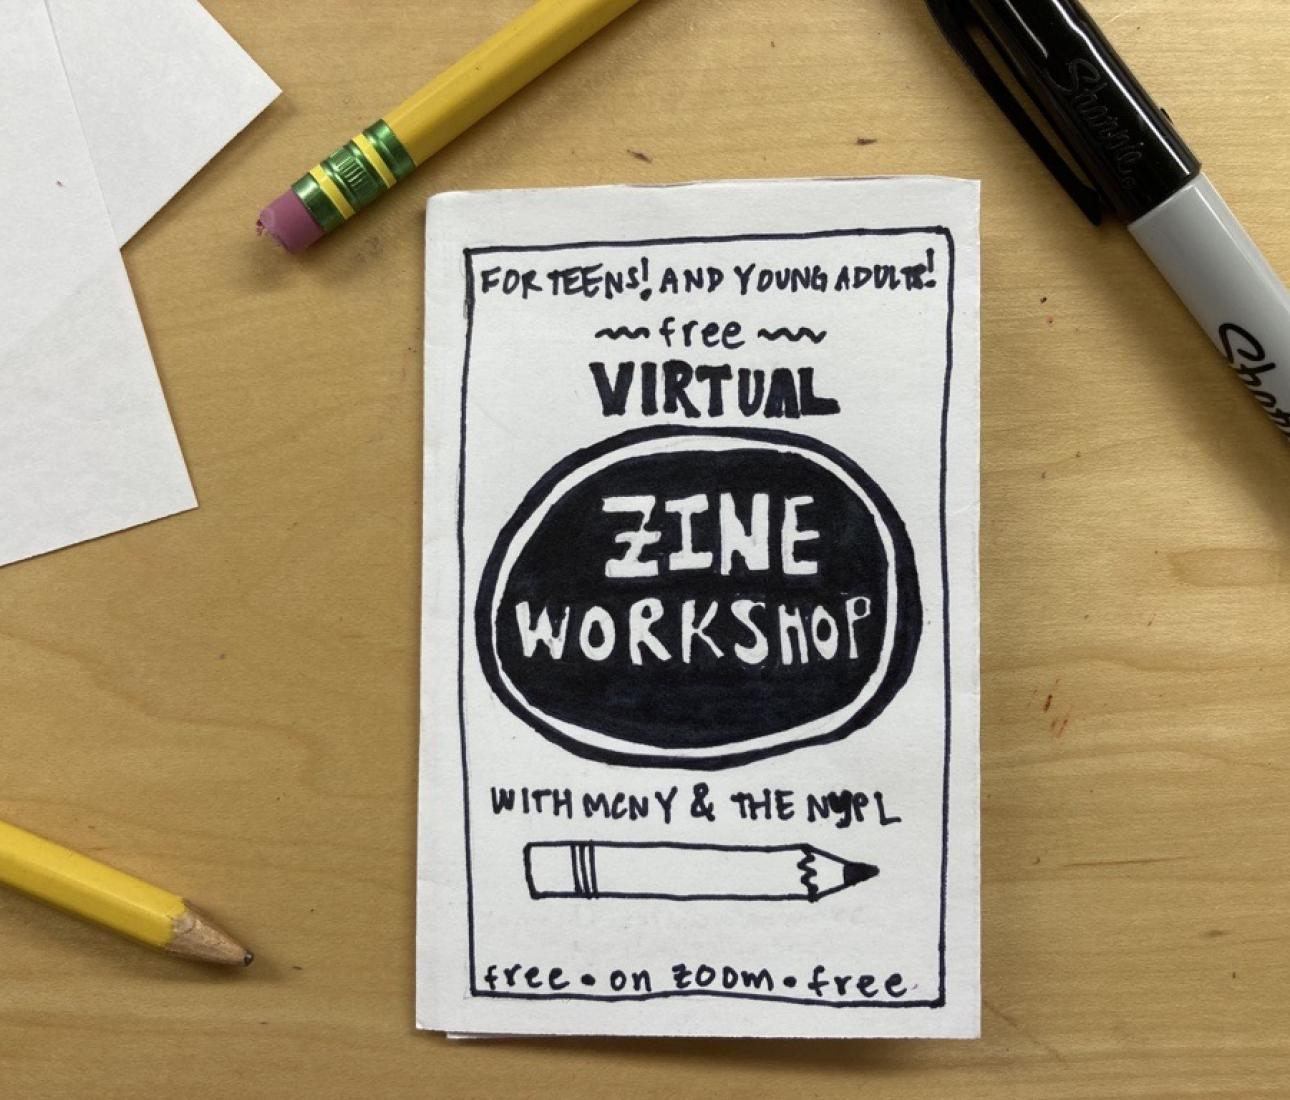 Virtual Zine Workshop